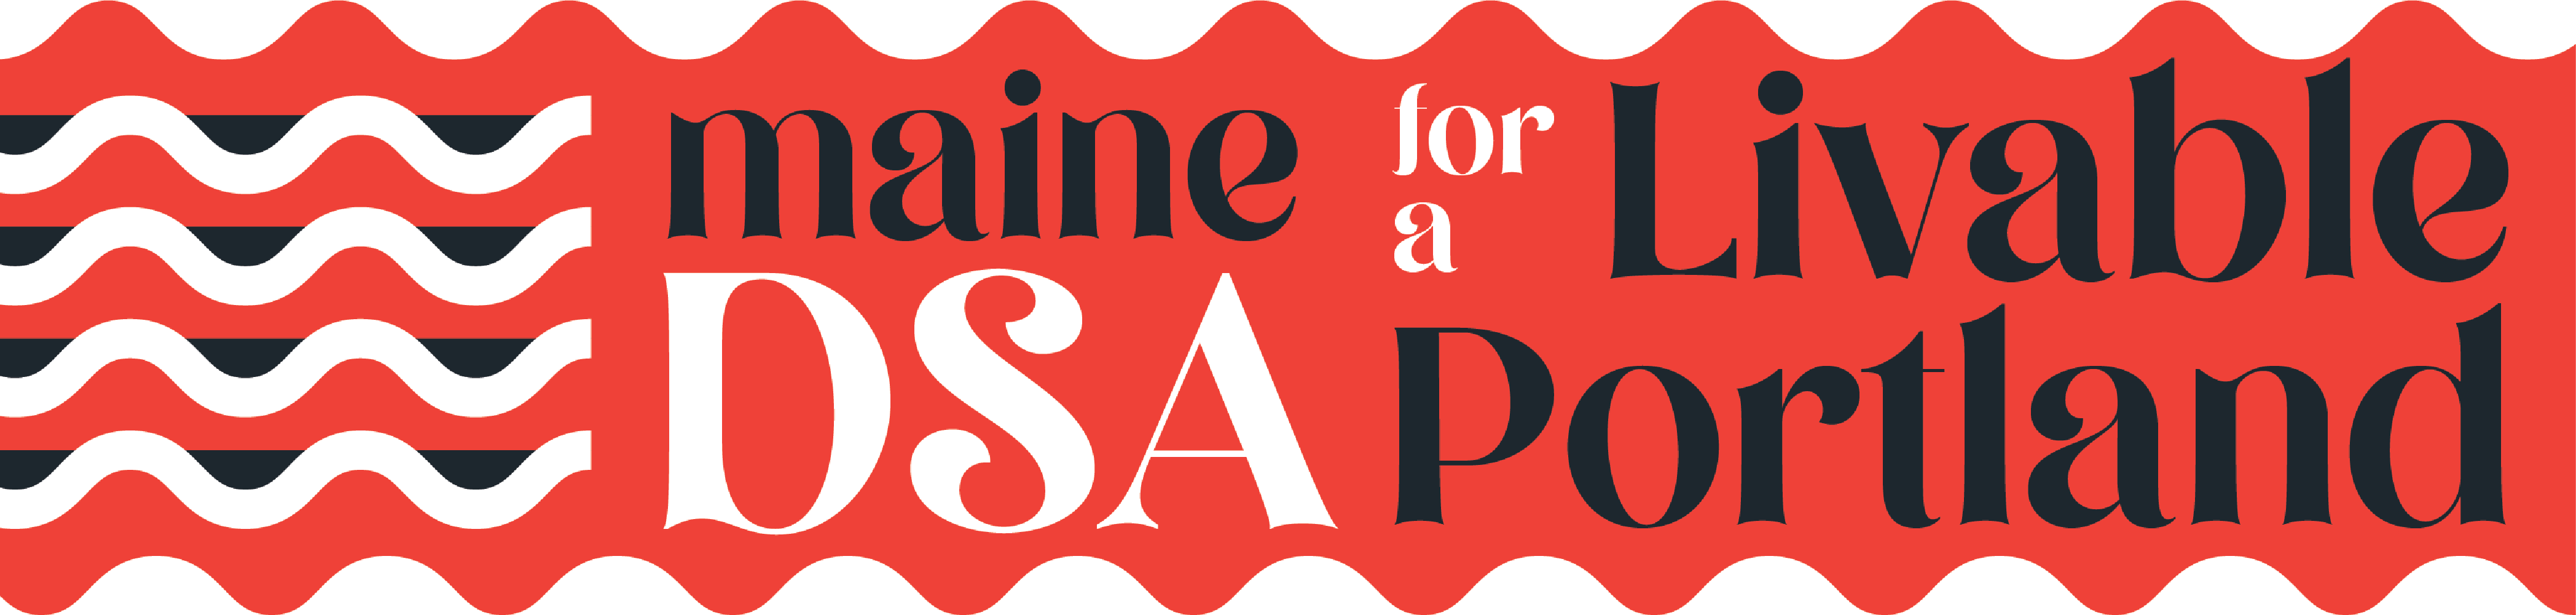 Announcing the Maine DSA Campaign for a Livable Portland